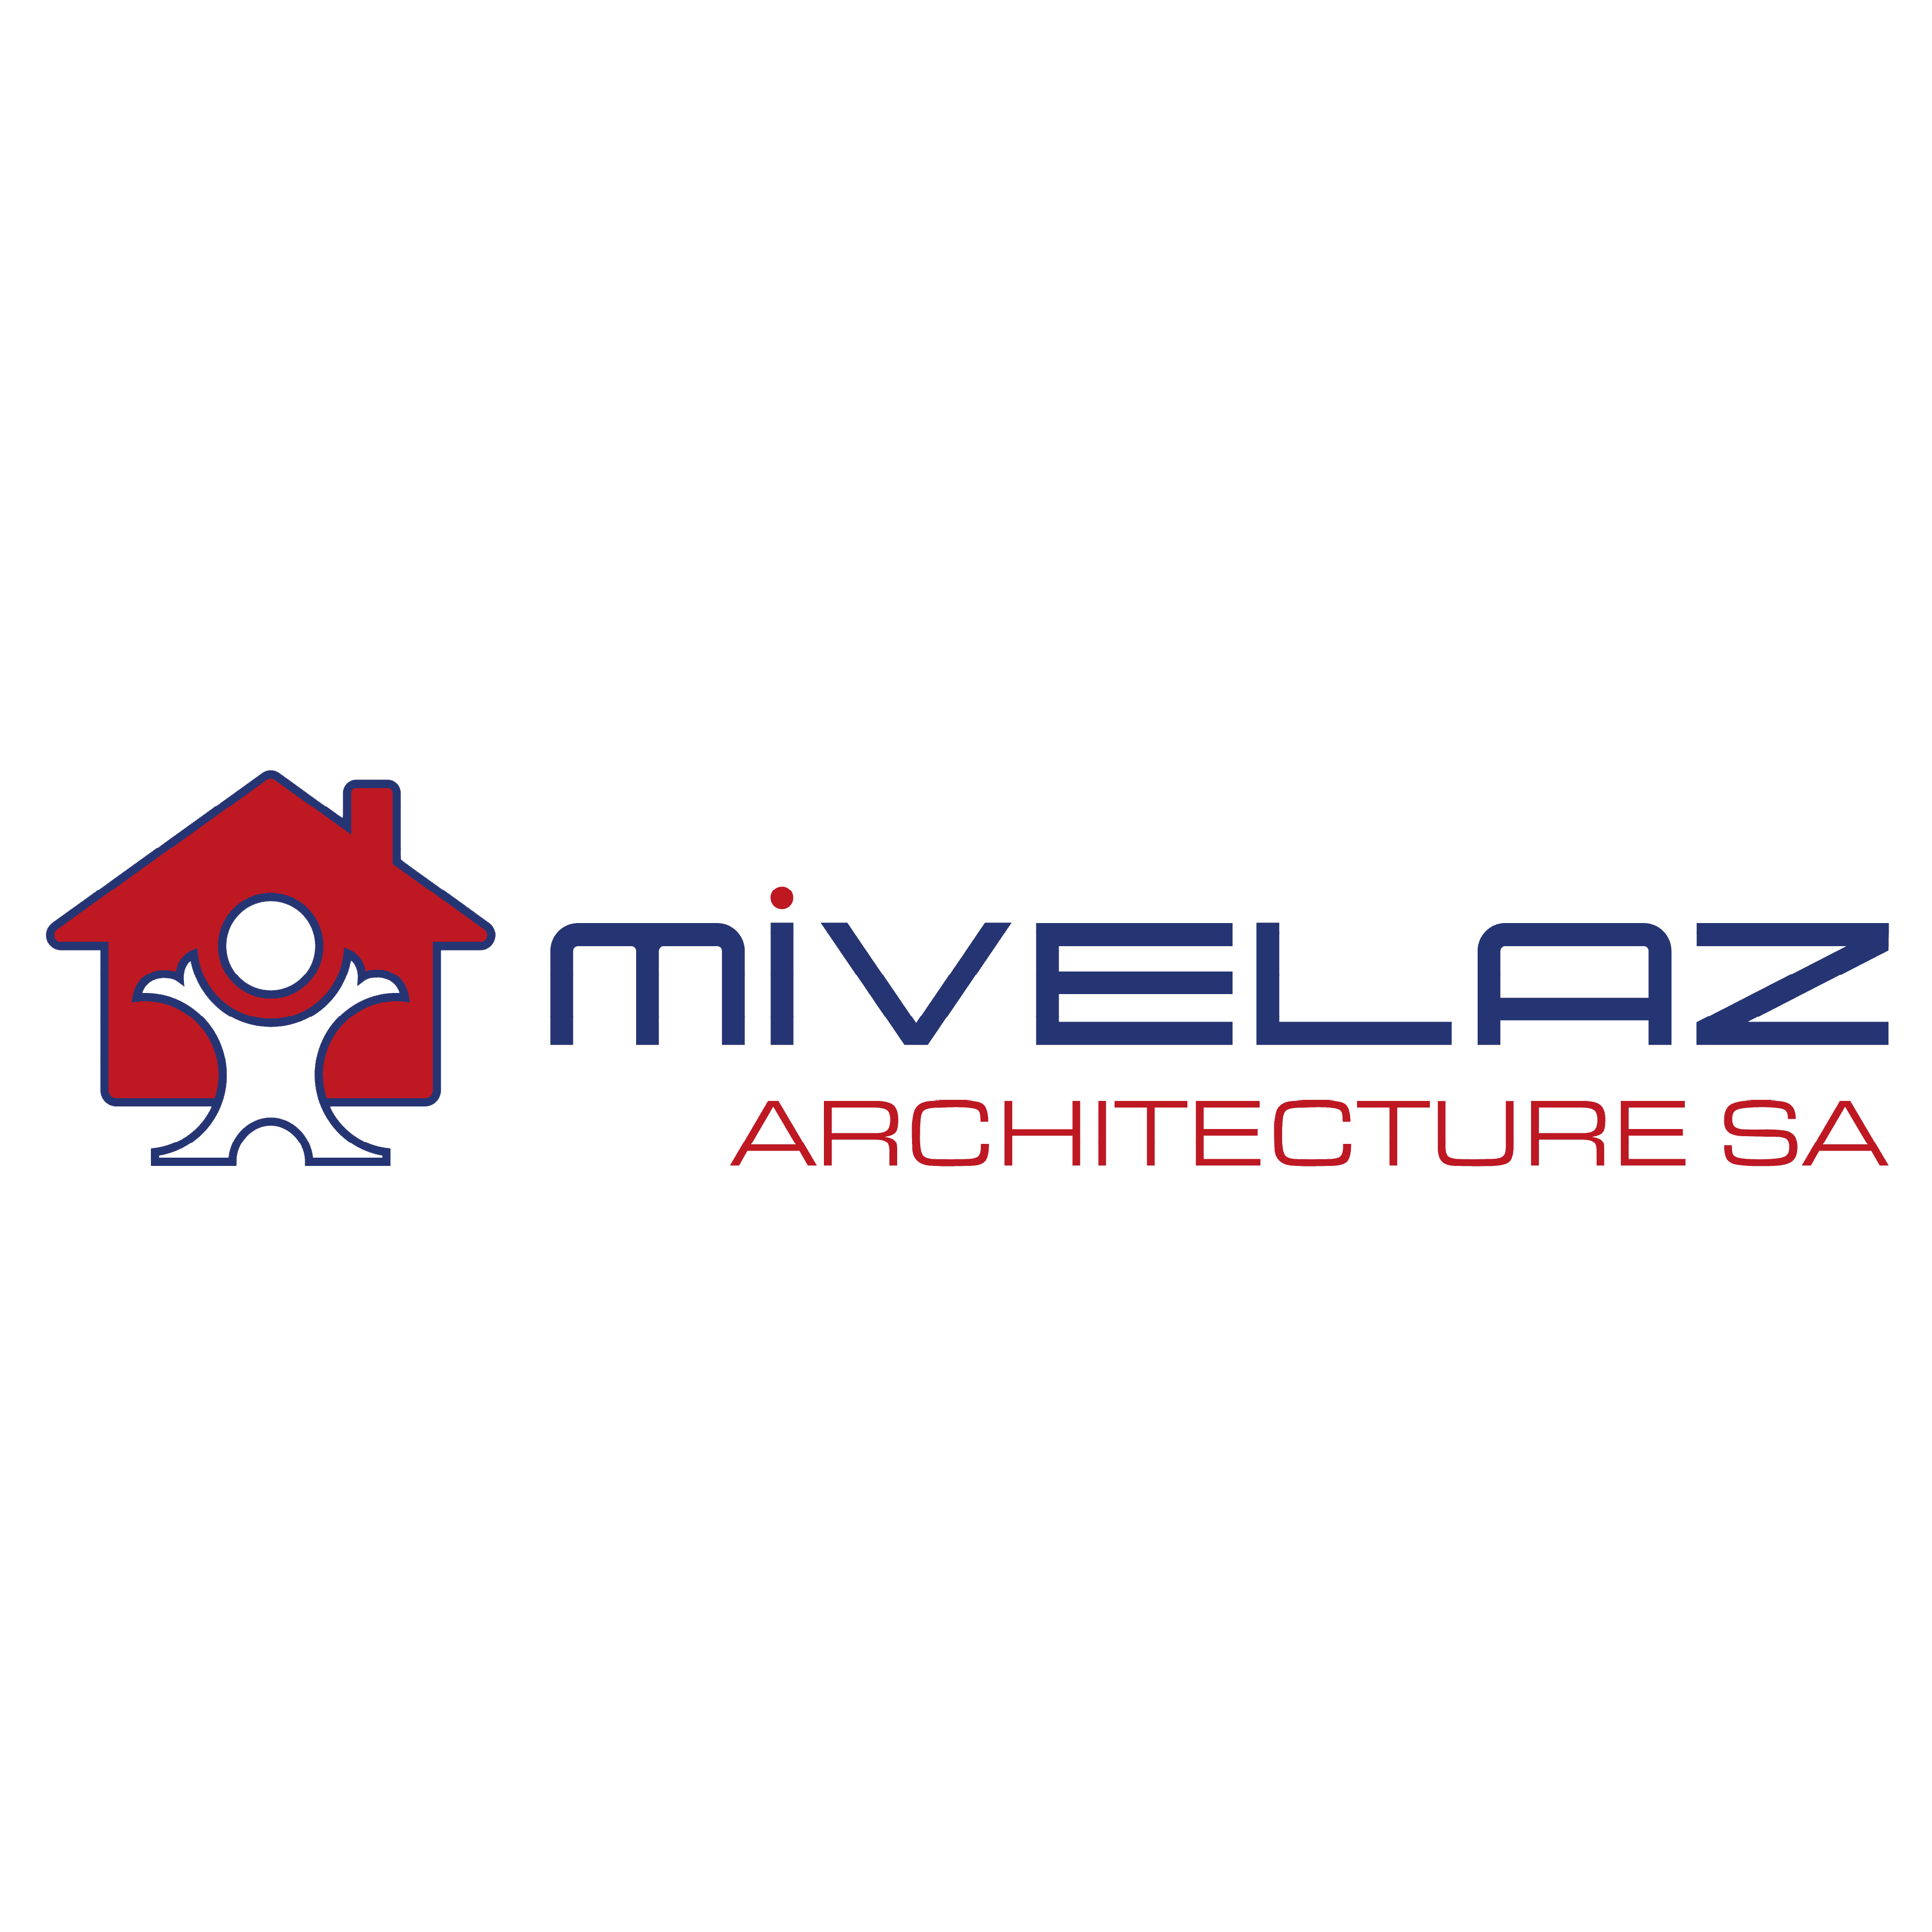 Mivelaz Architecture SA